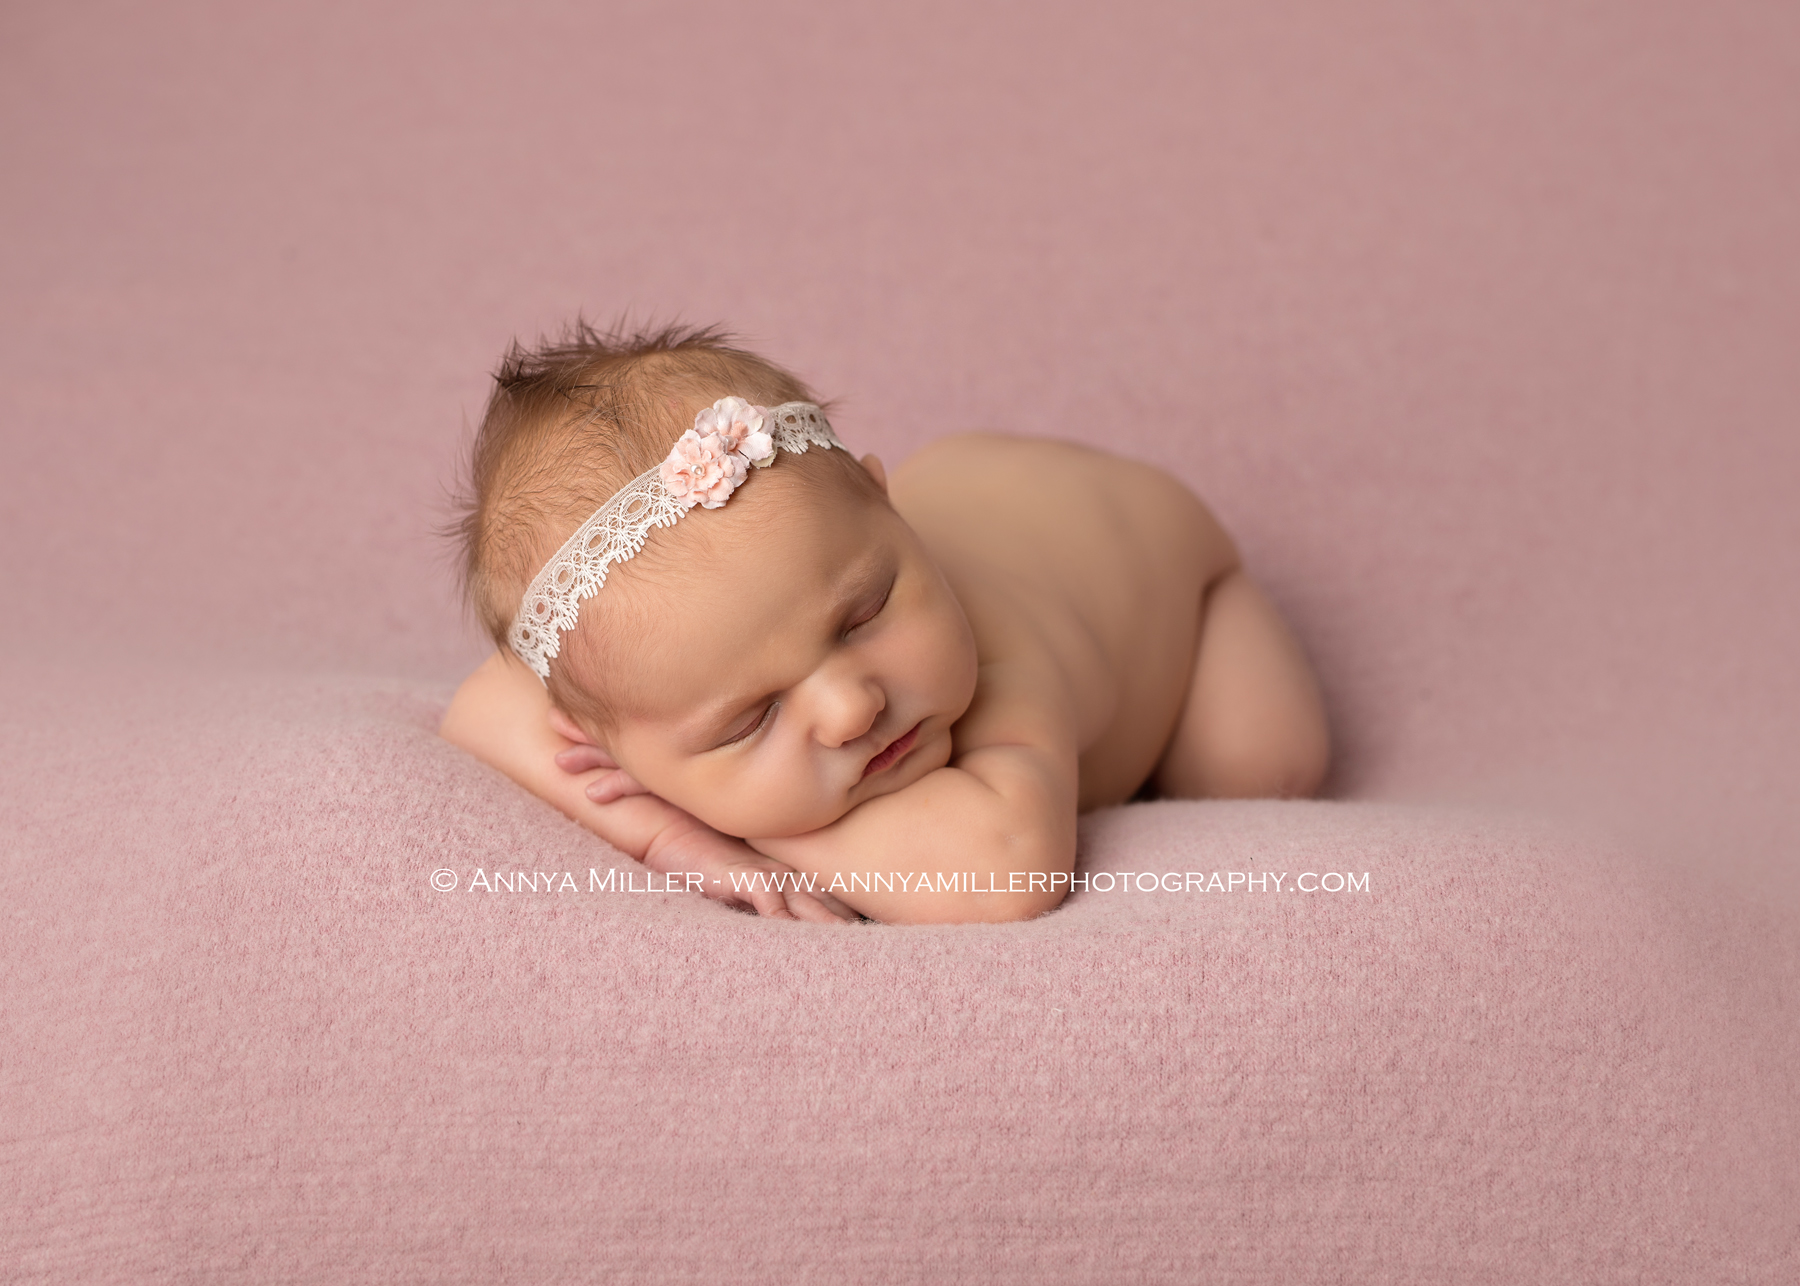 Portrait of a newborn baby girl by Toronto newborn photographer Annya Miller